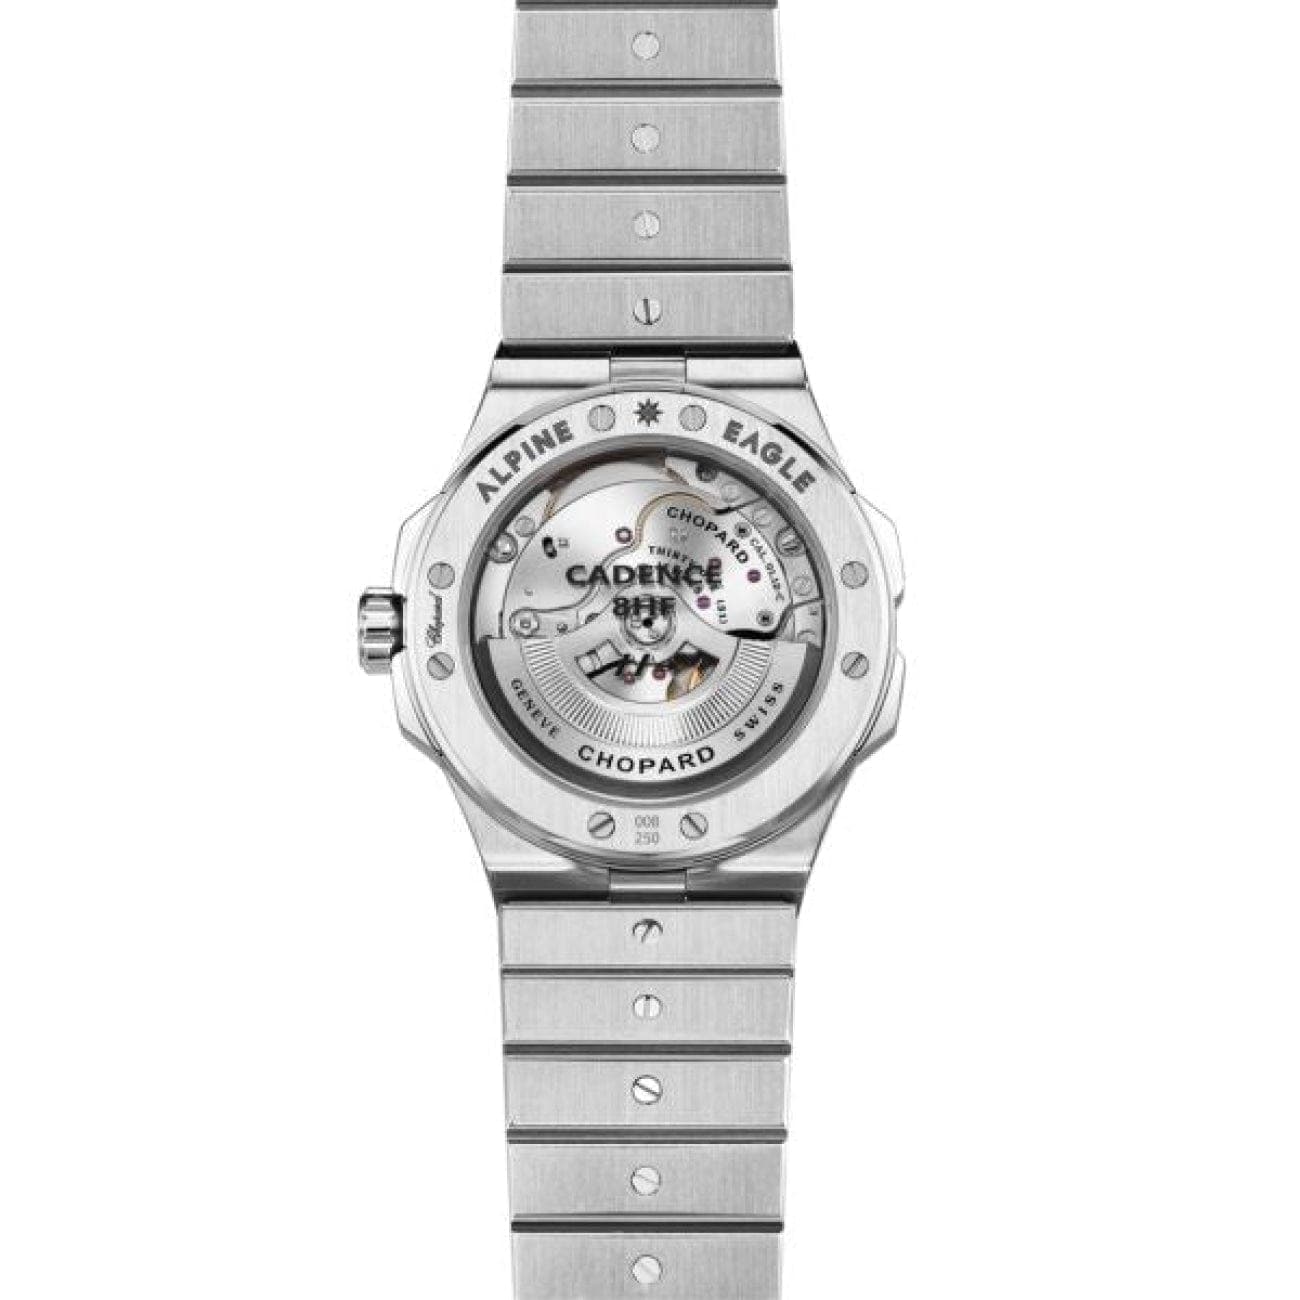 Chopard Alpine Eagle Japan Limited Edition - Watch I Love